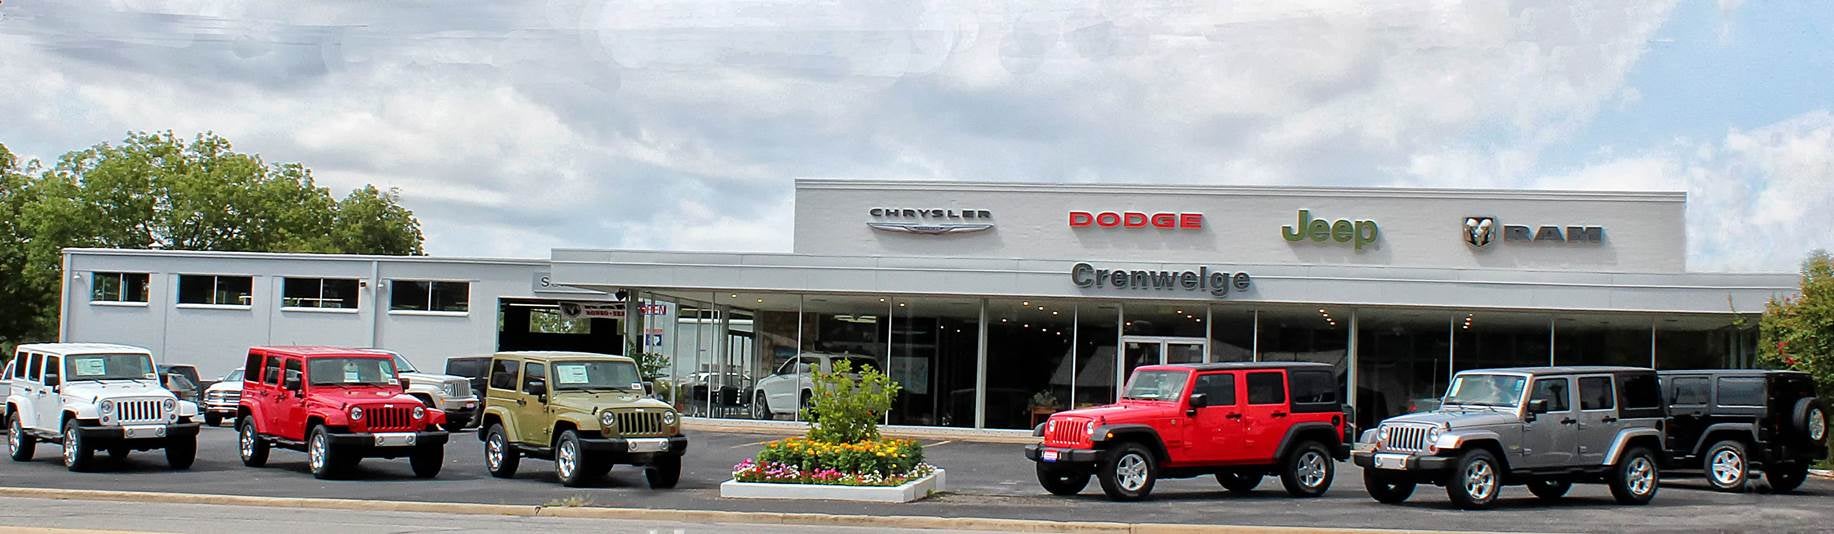 Contact our dealership Crenwelge Motor Sales in Fredericksburg, TX